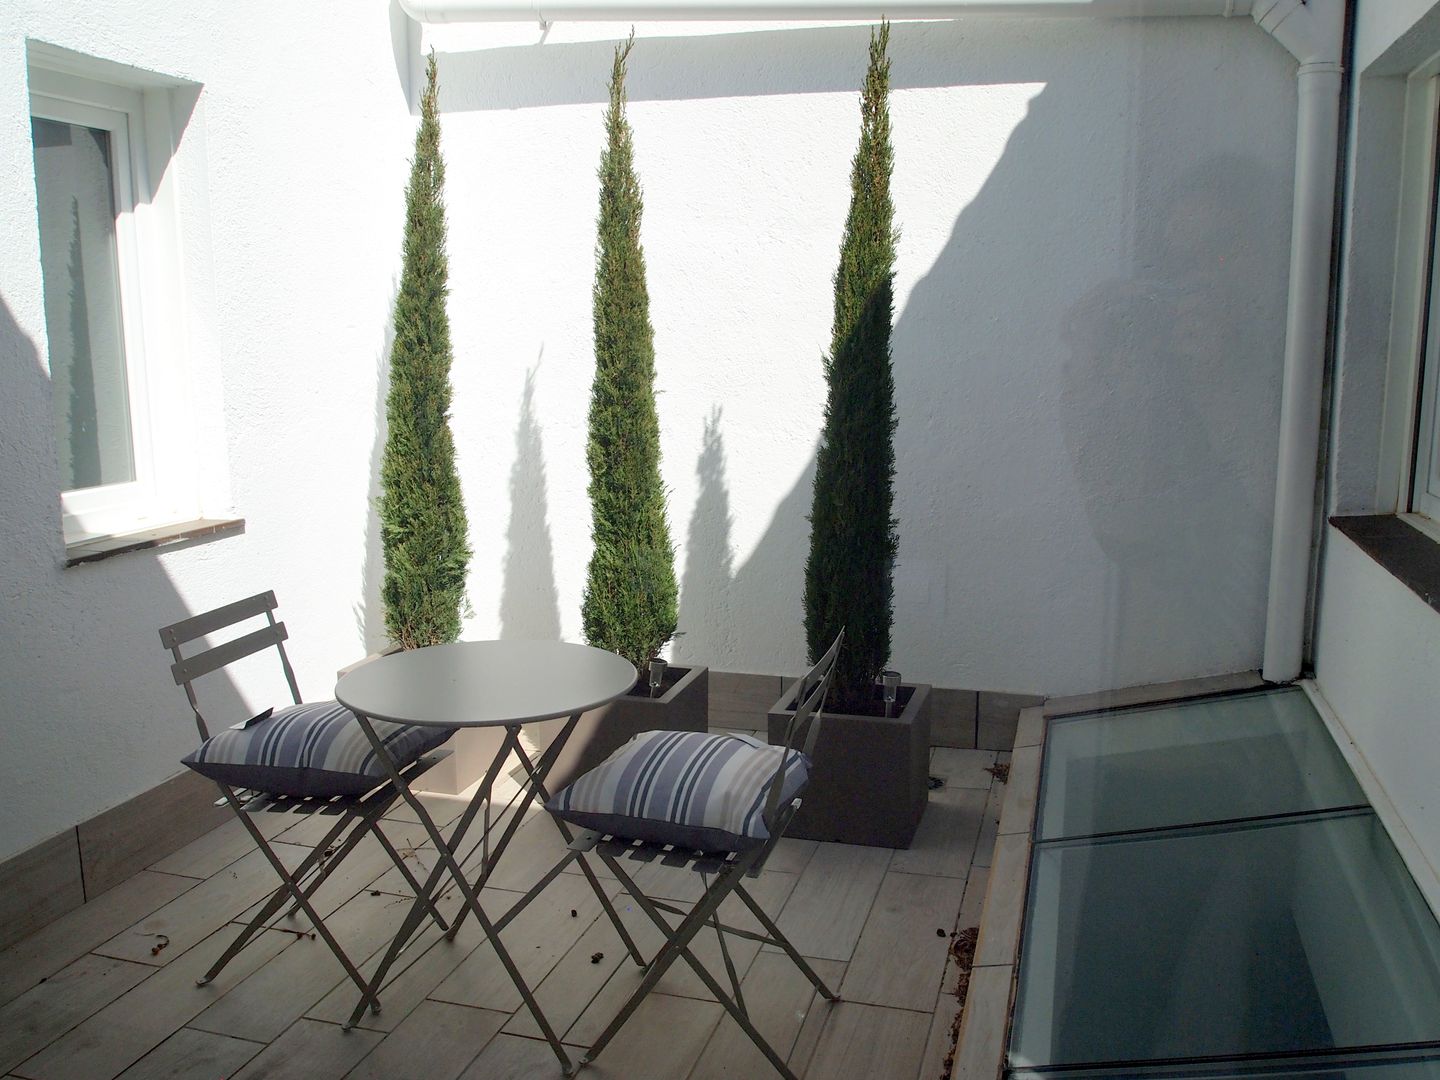 Reforma integral de vivienda unifamiliar en Madrid, Reformmia Reformmia Jardins modernos